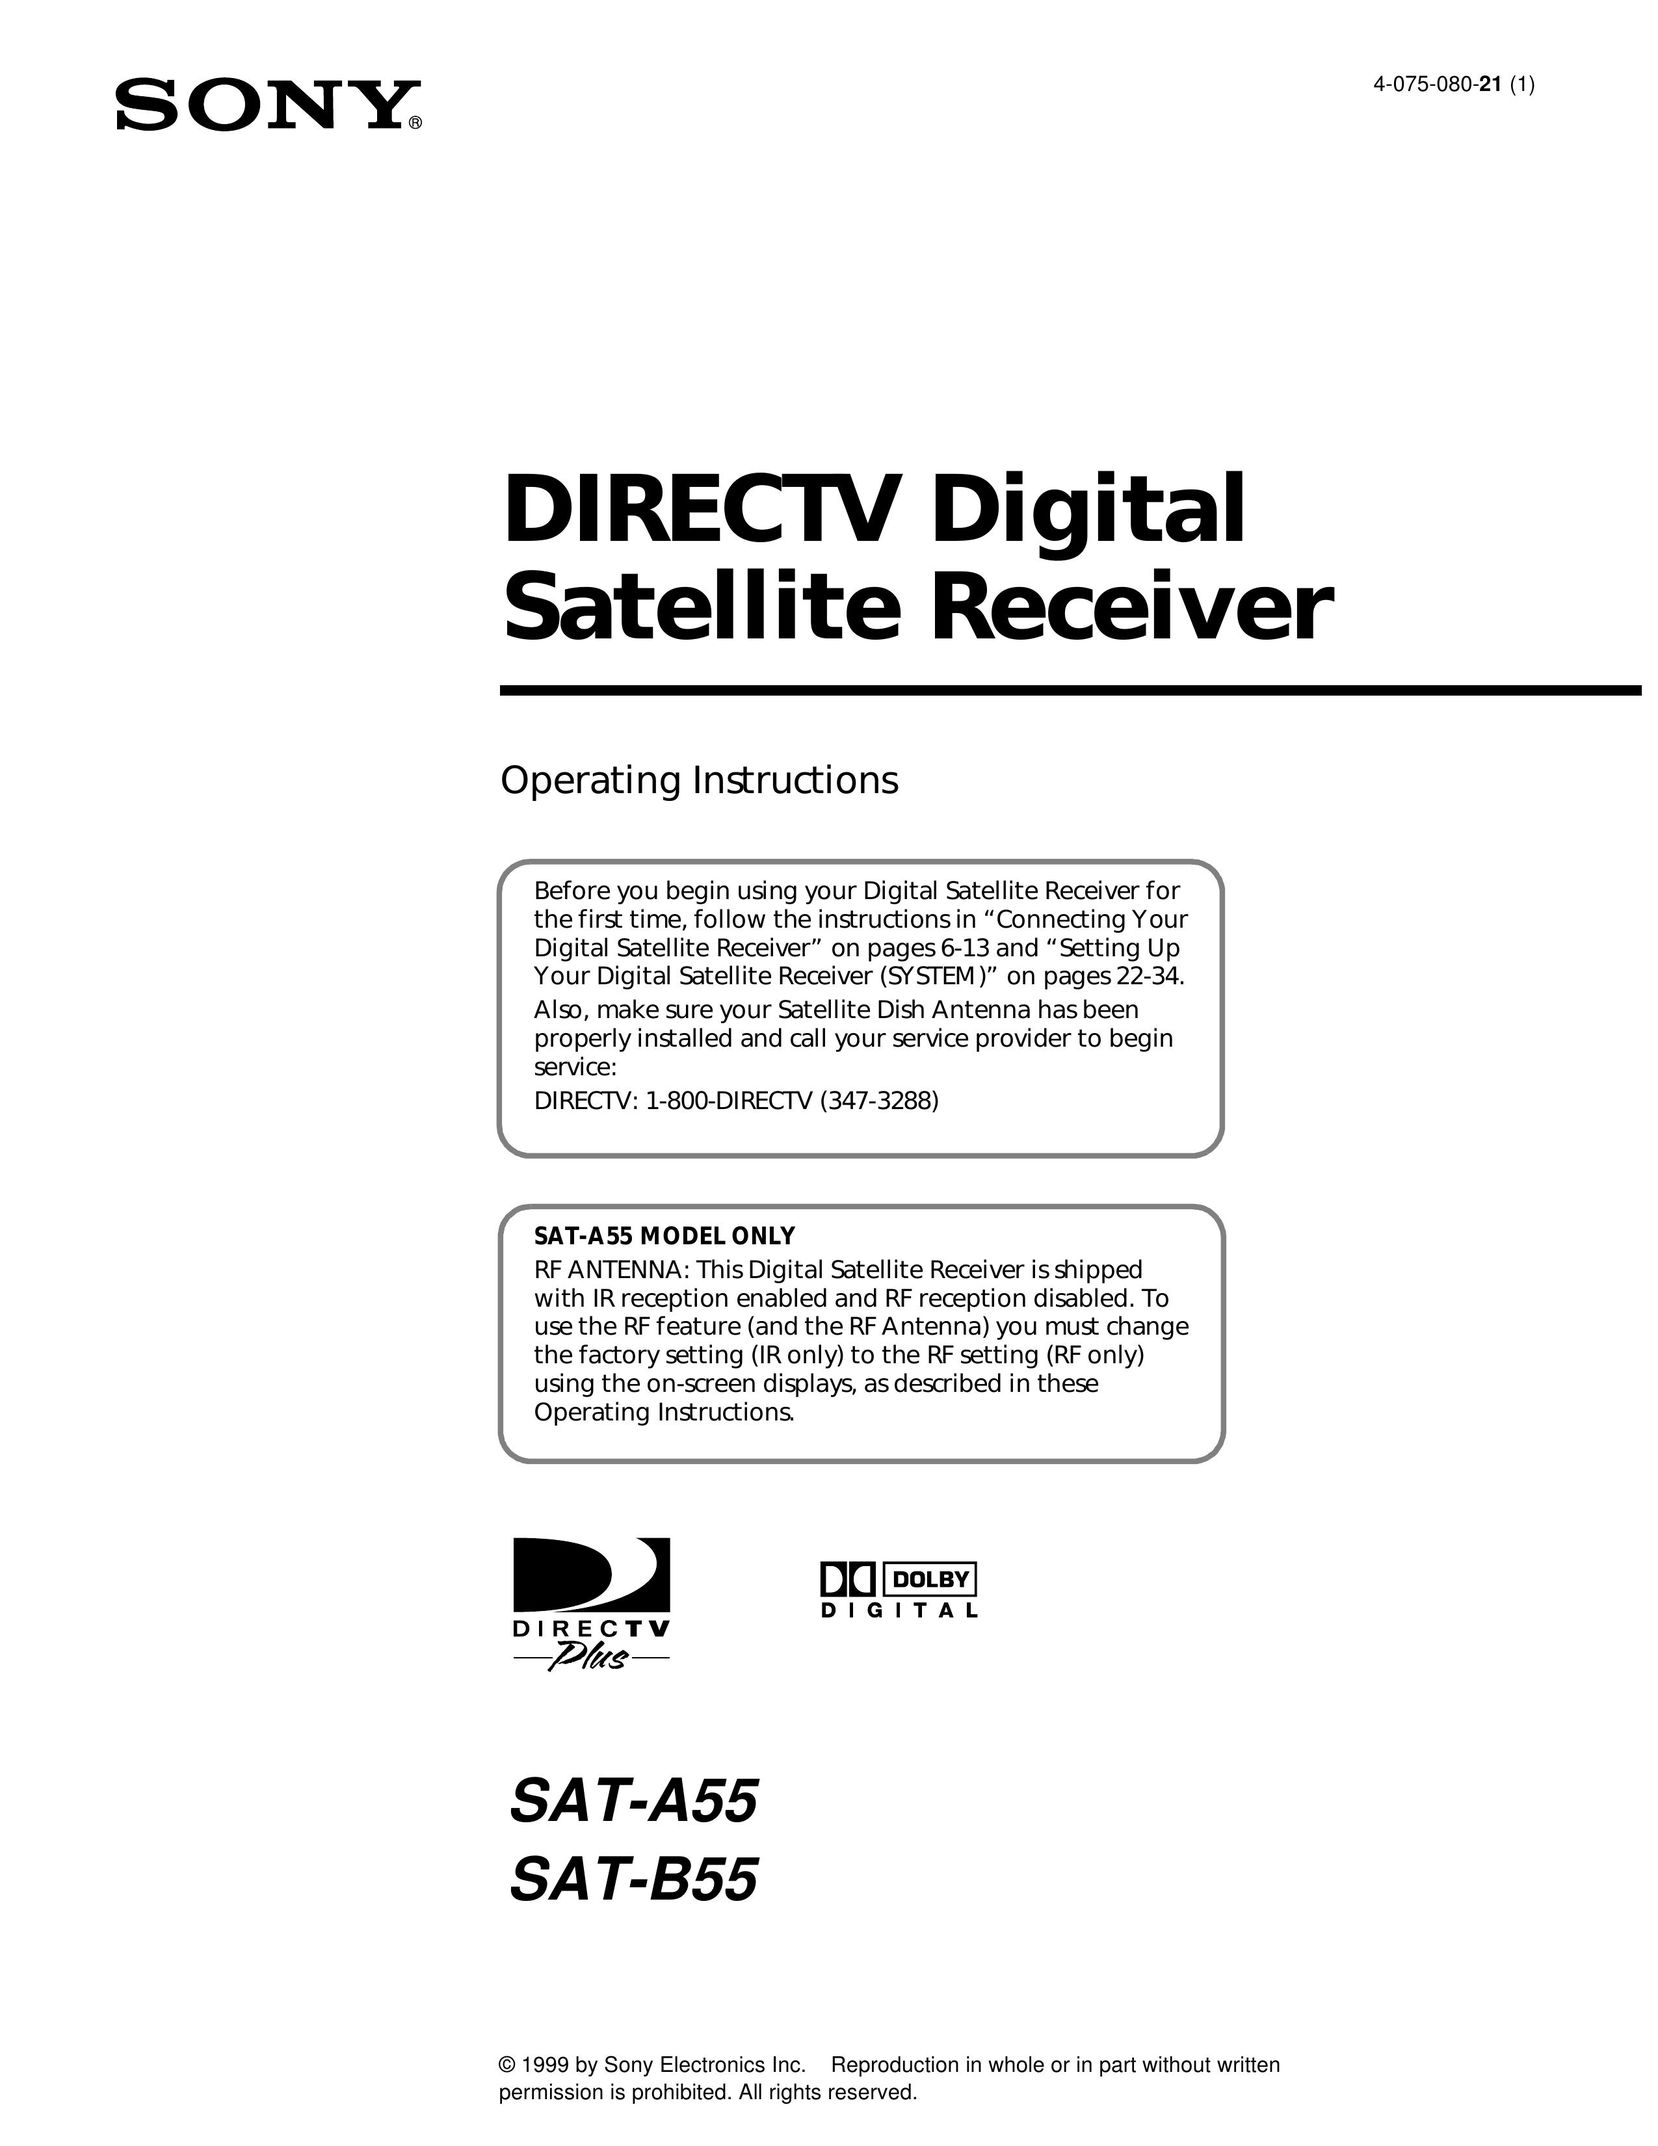 Sony SAT-A55 Satellite TV System User Manual